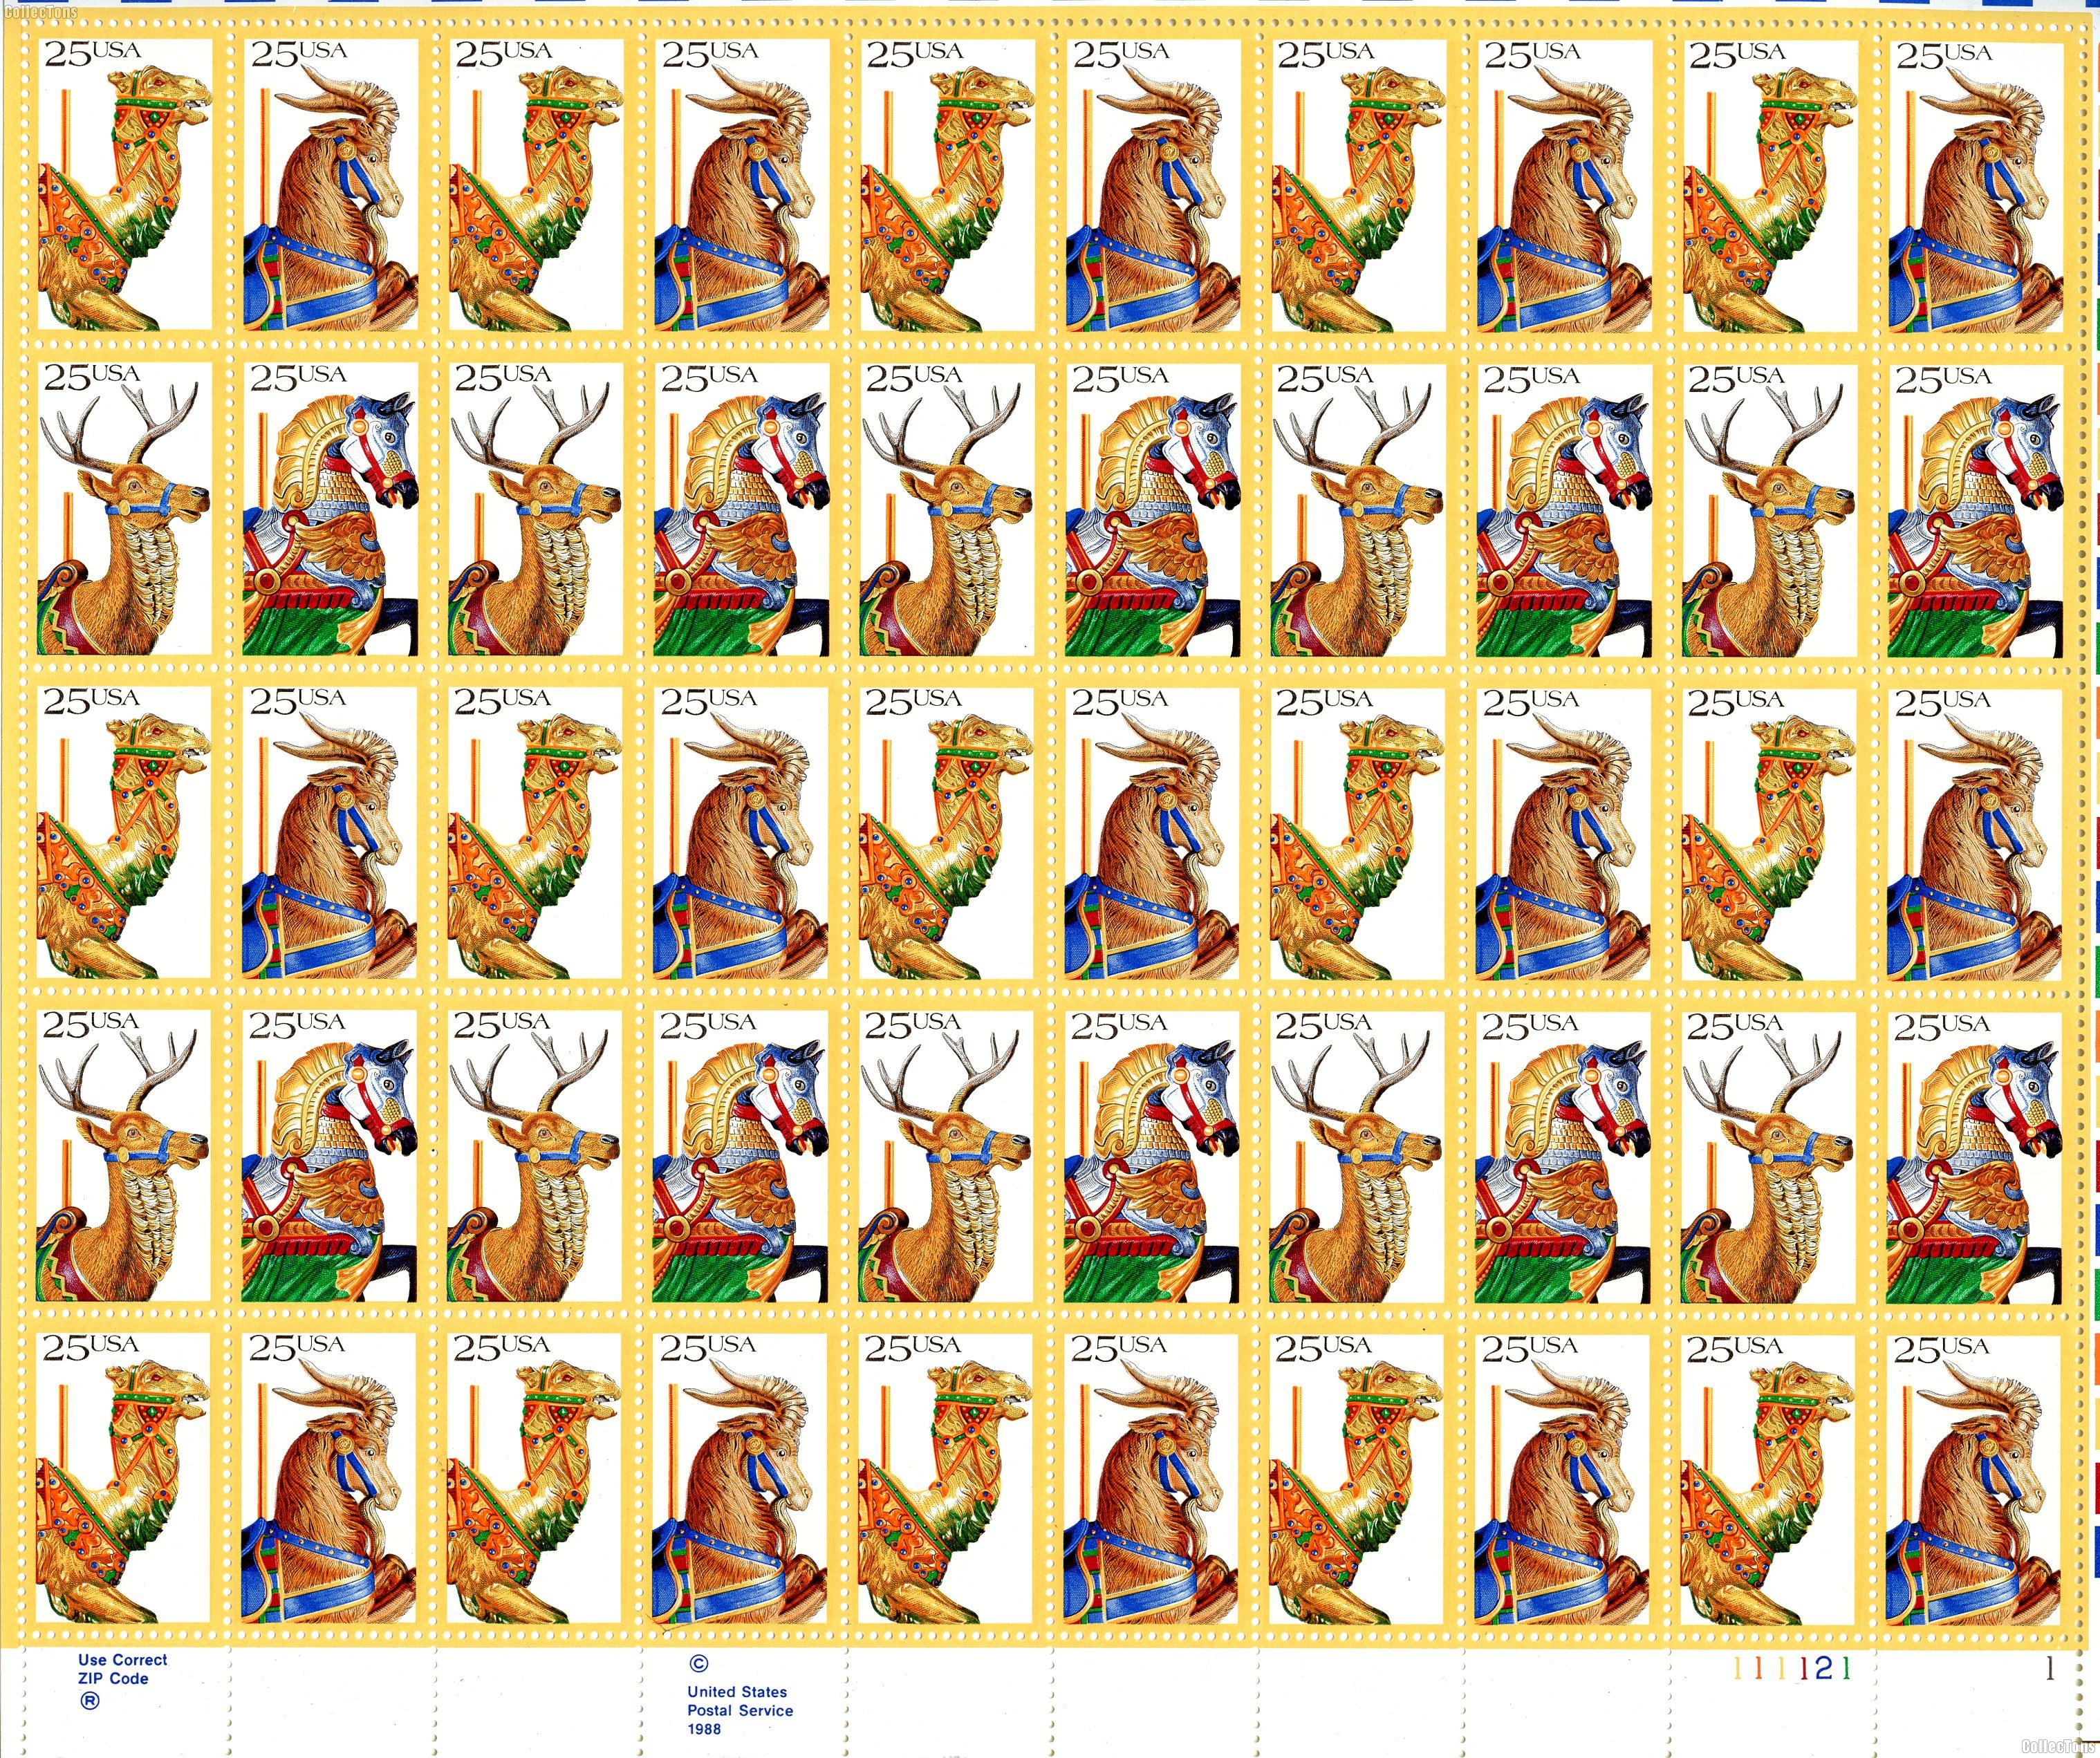 1988 Carousel Animals 25 Cent US Postage Stamp MNH Sheet of 50 Scott #2390-2393